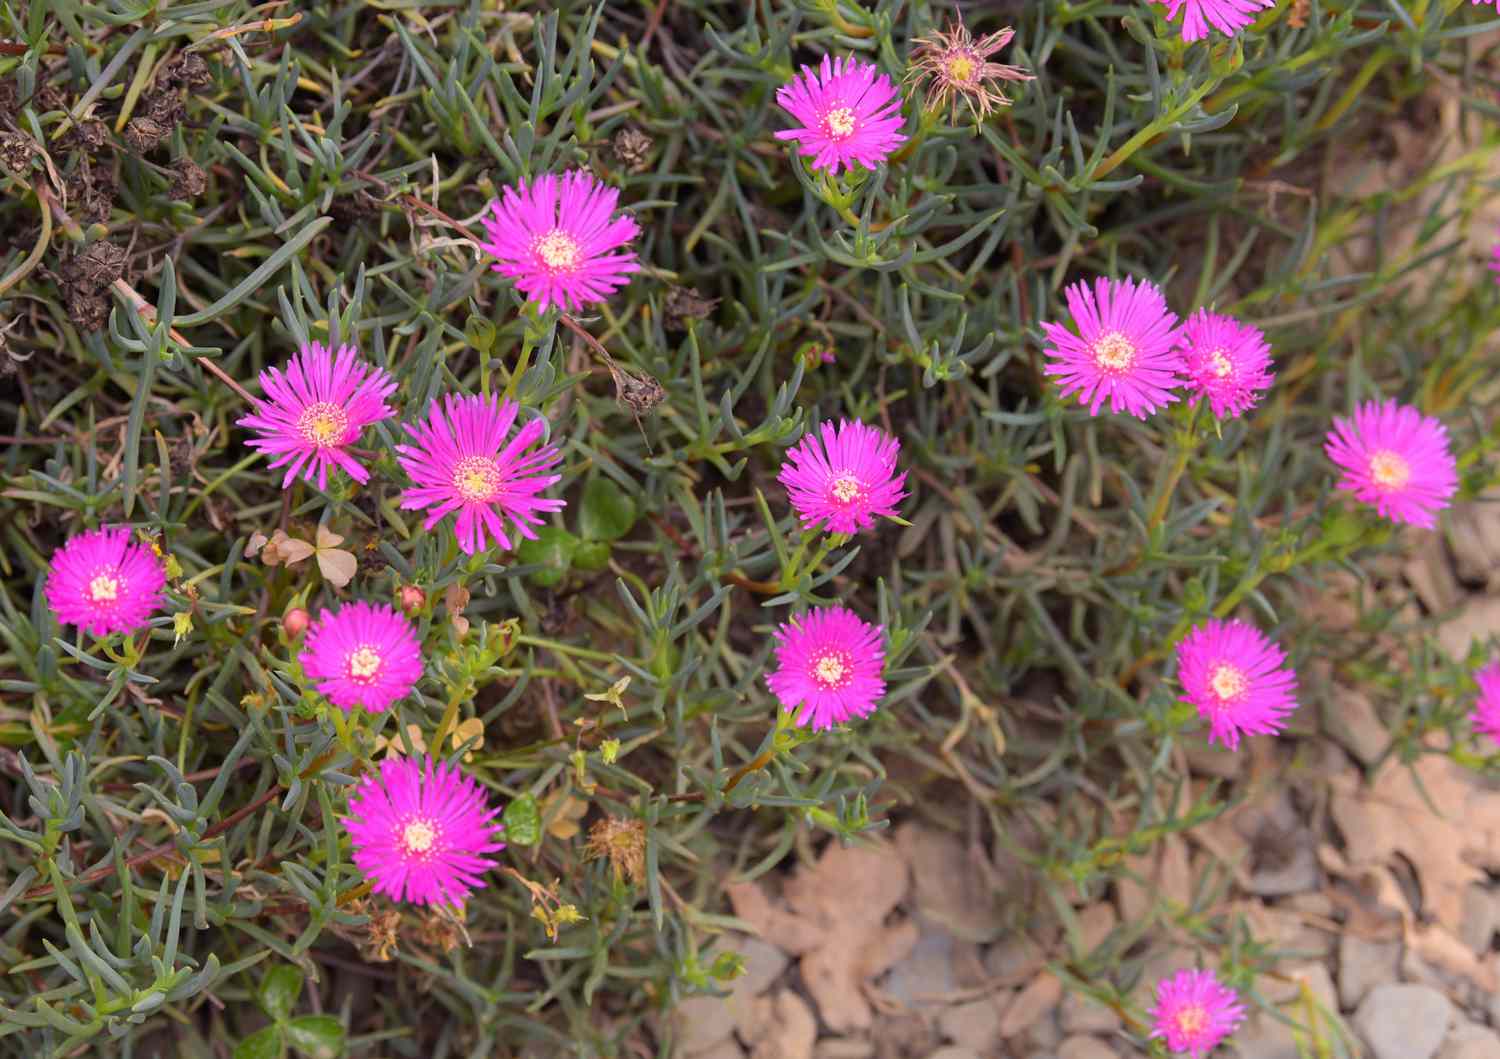 Winterharte Eispflanze mit dünnen rosafarbenen Strahlenblüten an sukkulentenartigen Stängeln